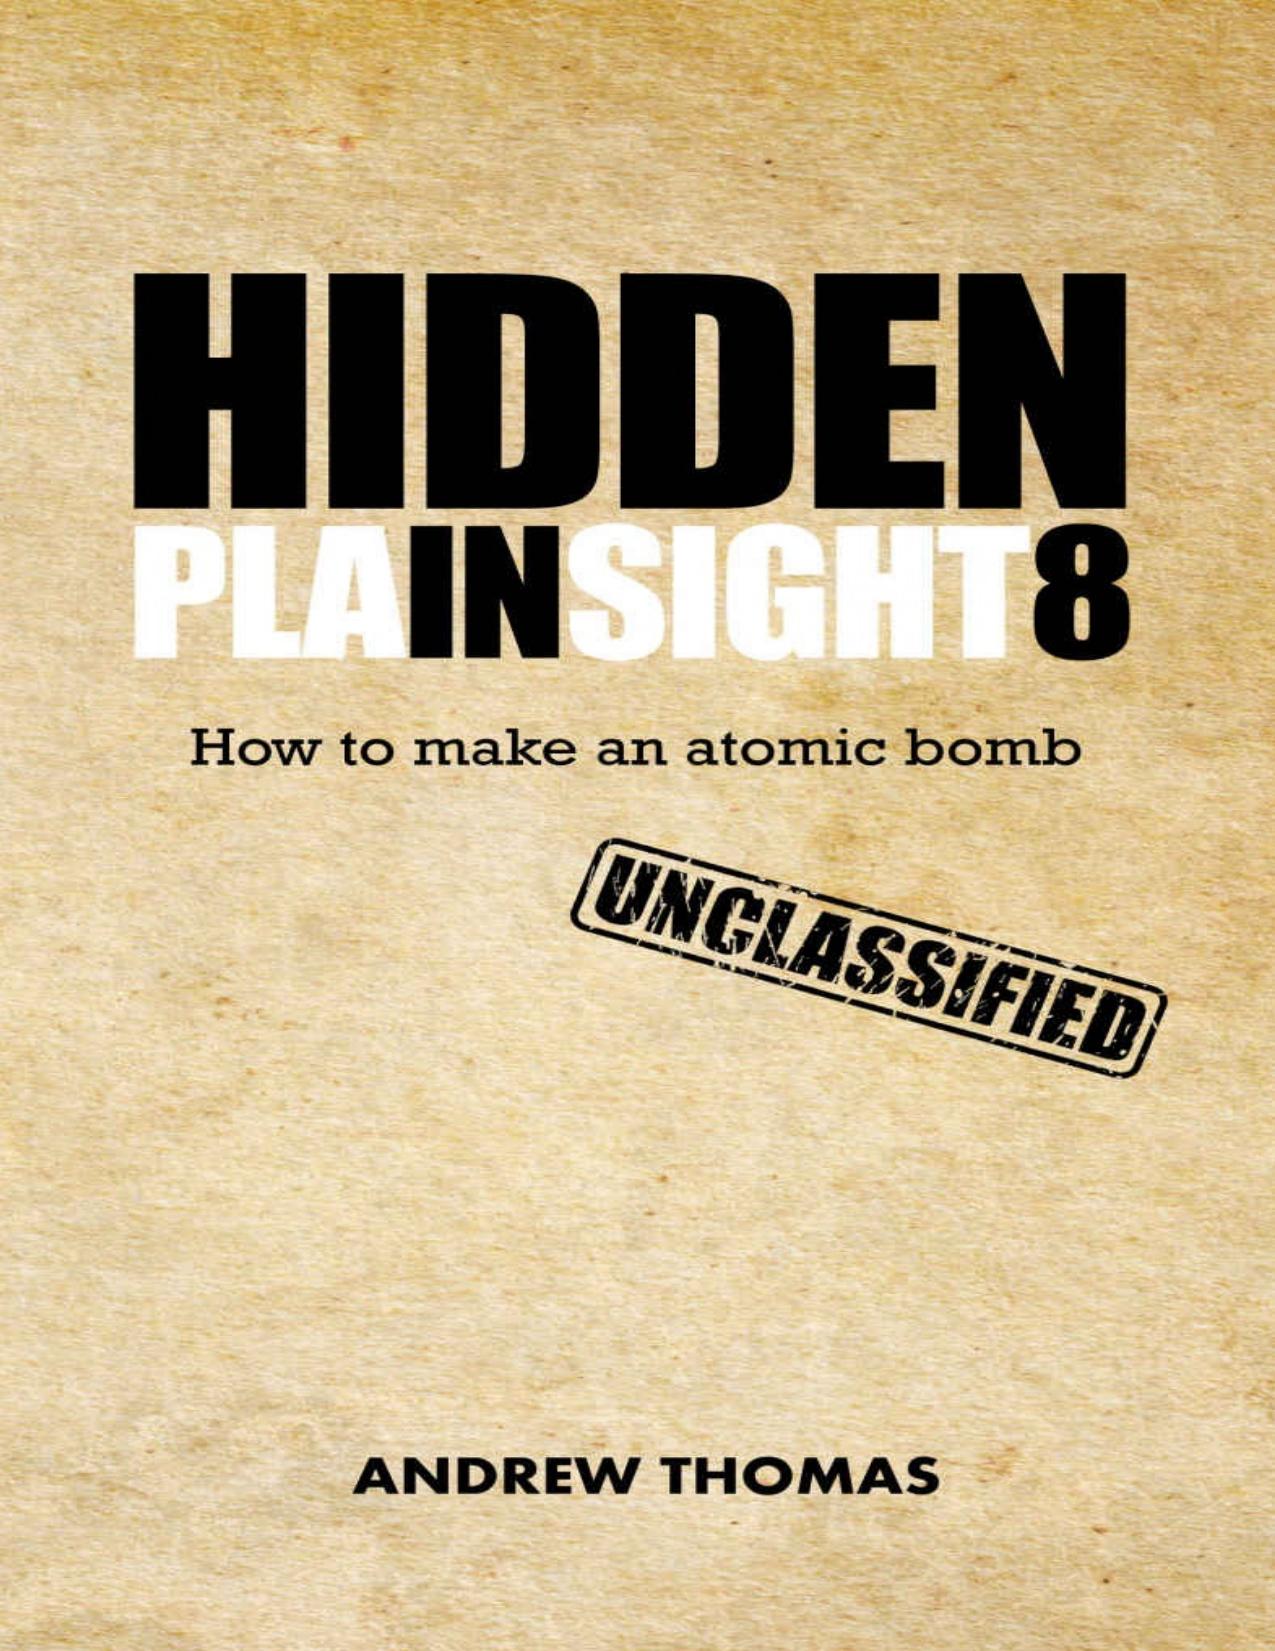 How to Make an Atomic Bomb - PDFDrive.com